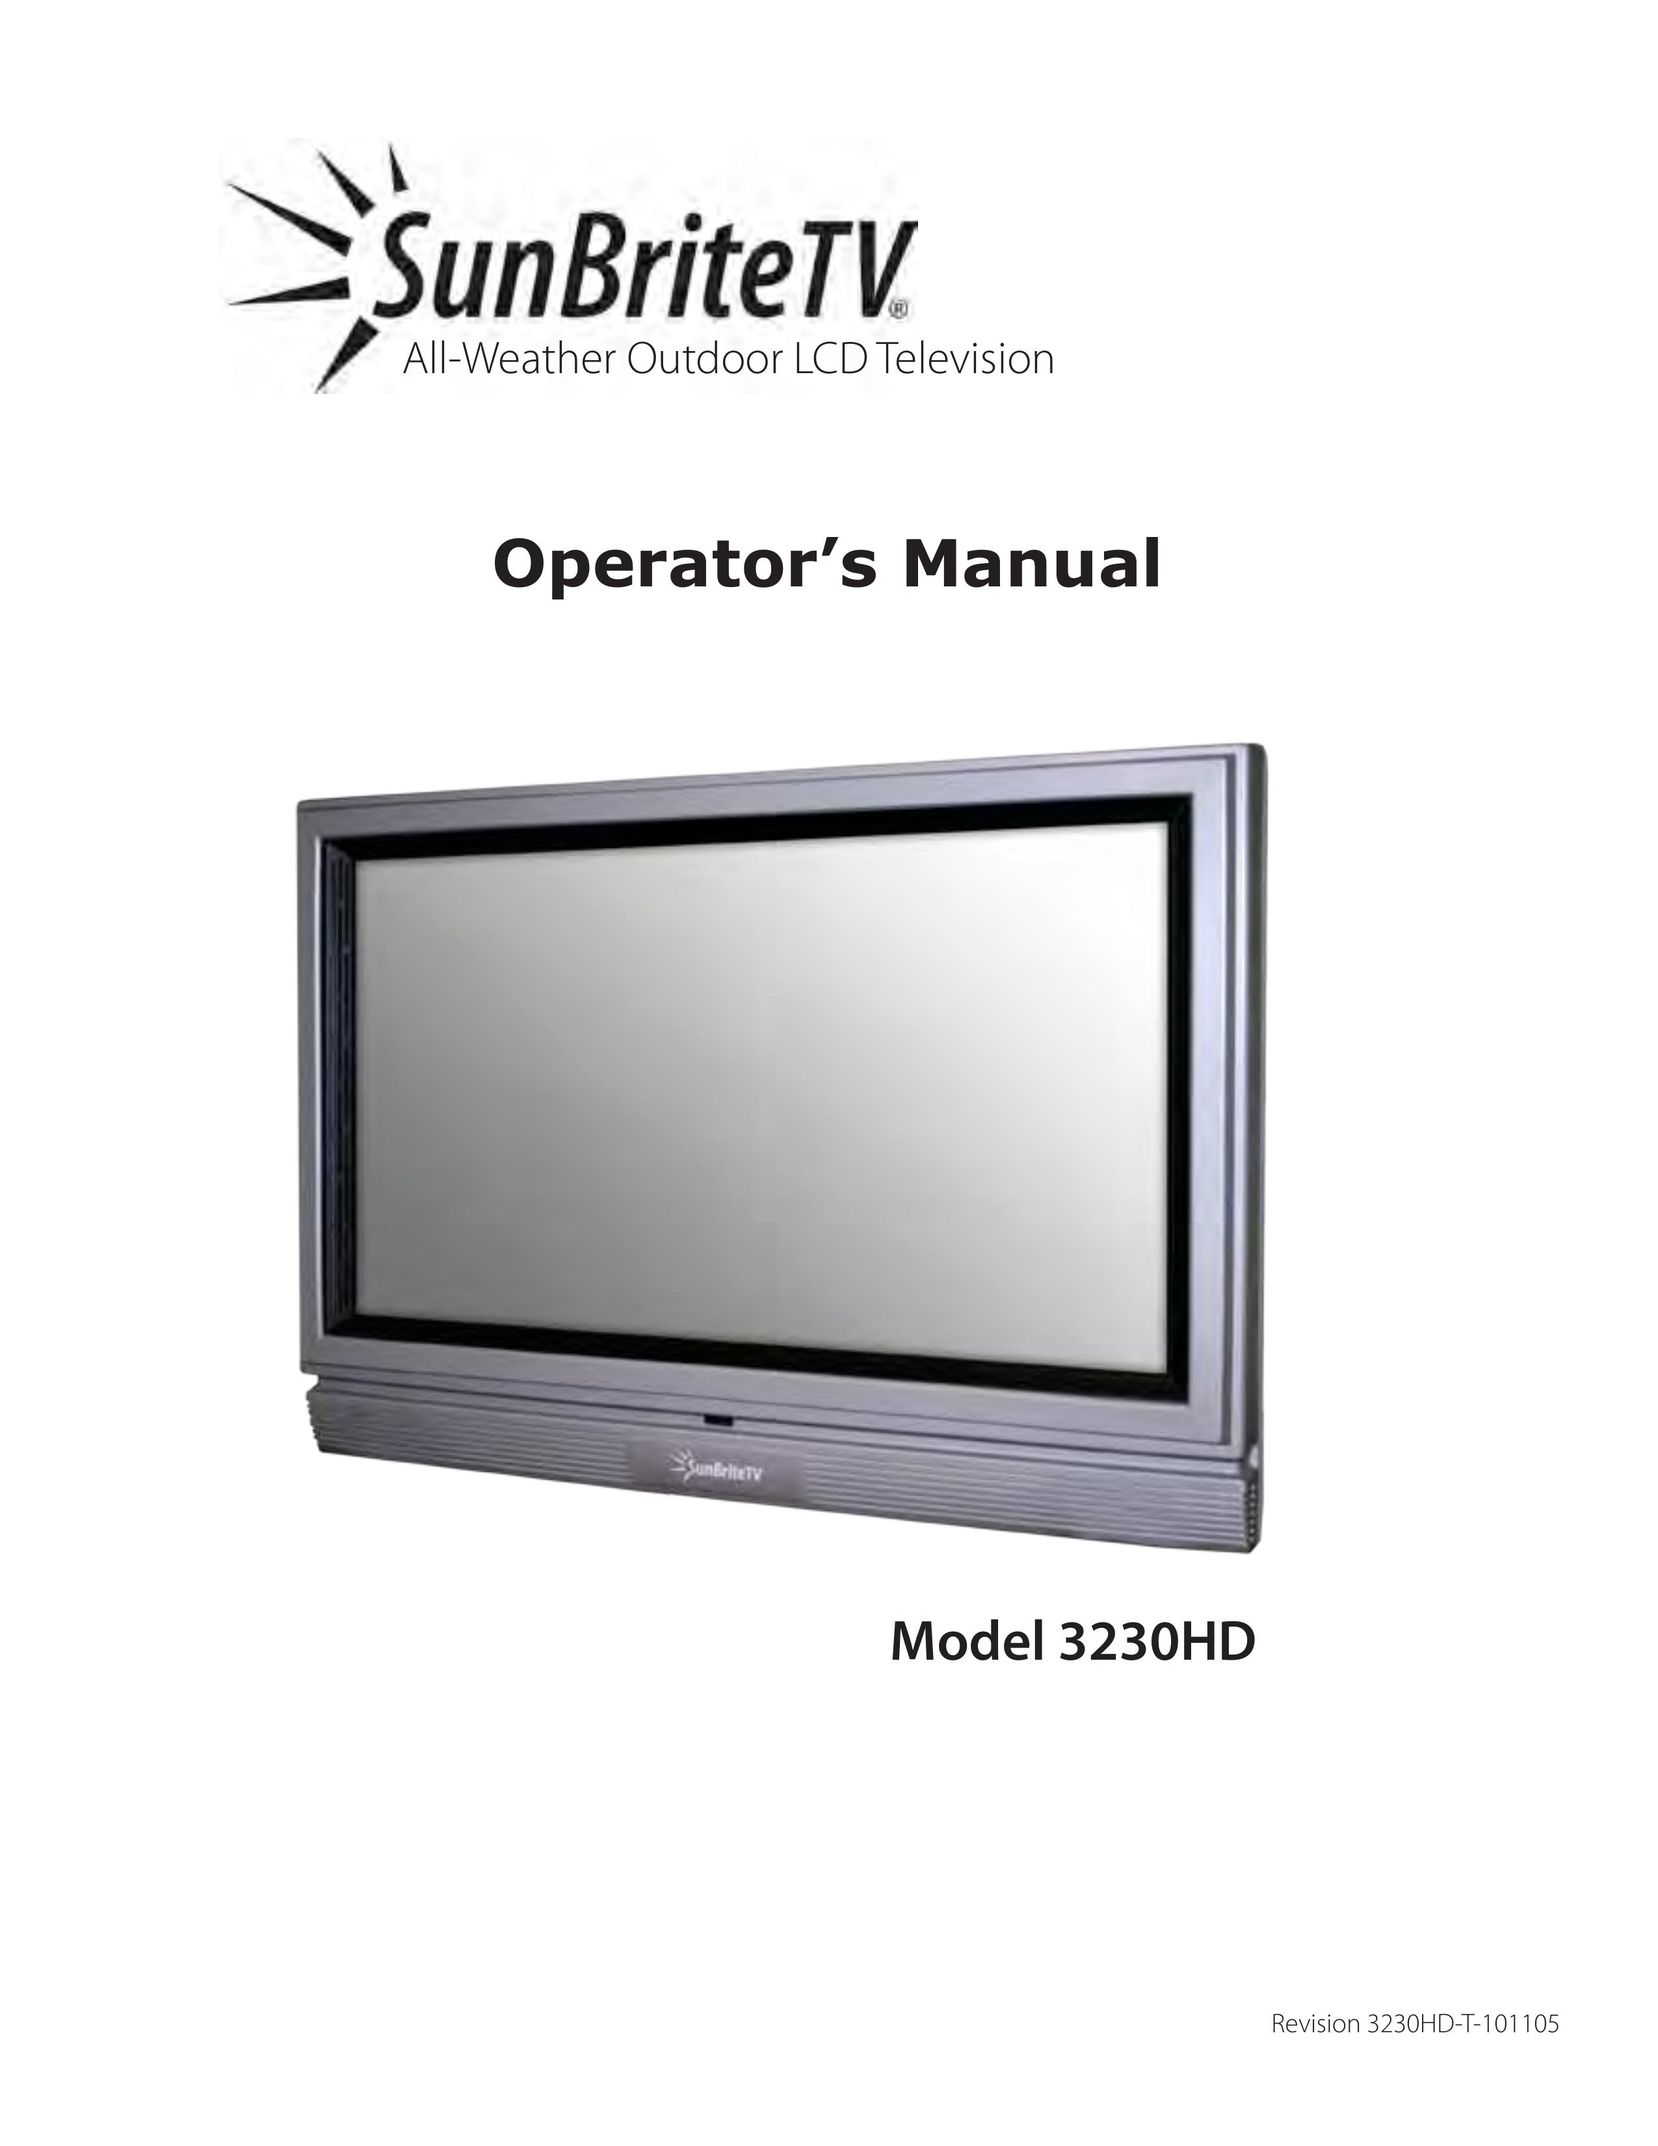 SunBriteTV 3230HD Flat Panel Television User Manual